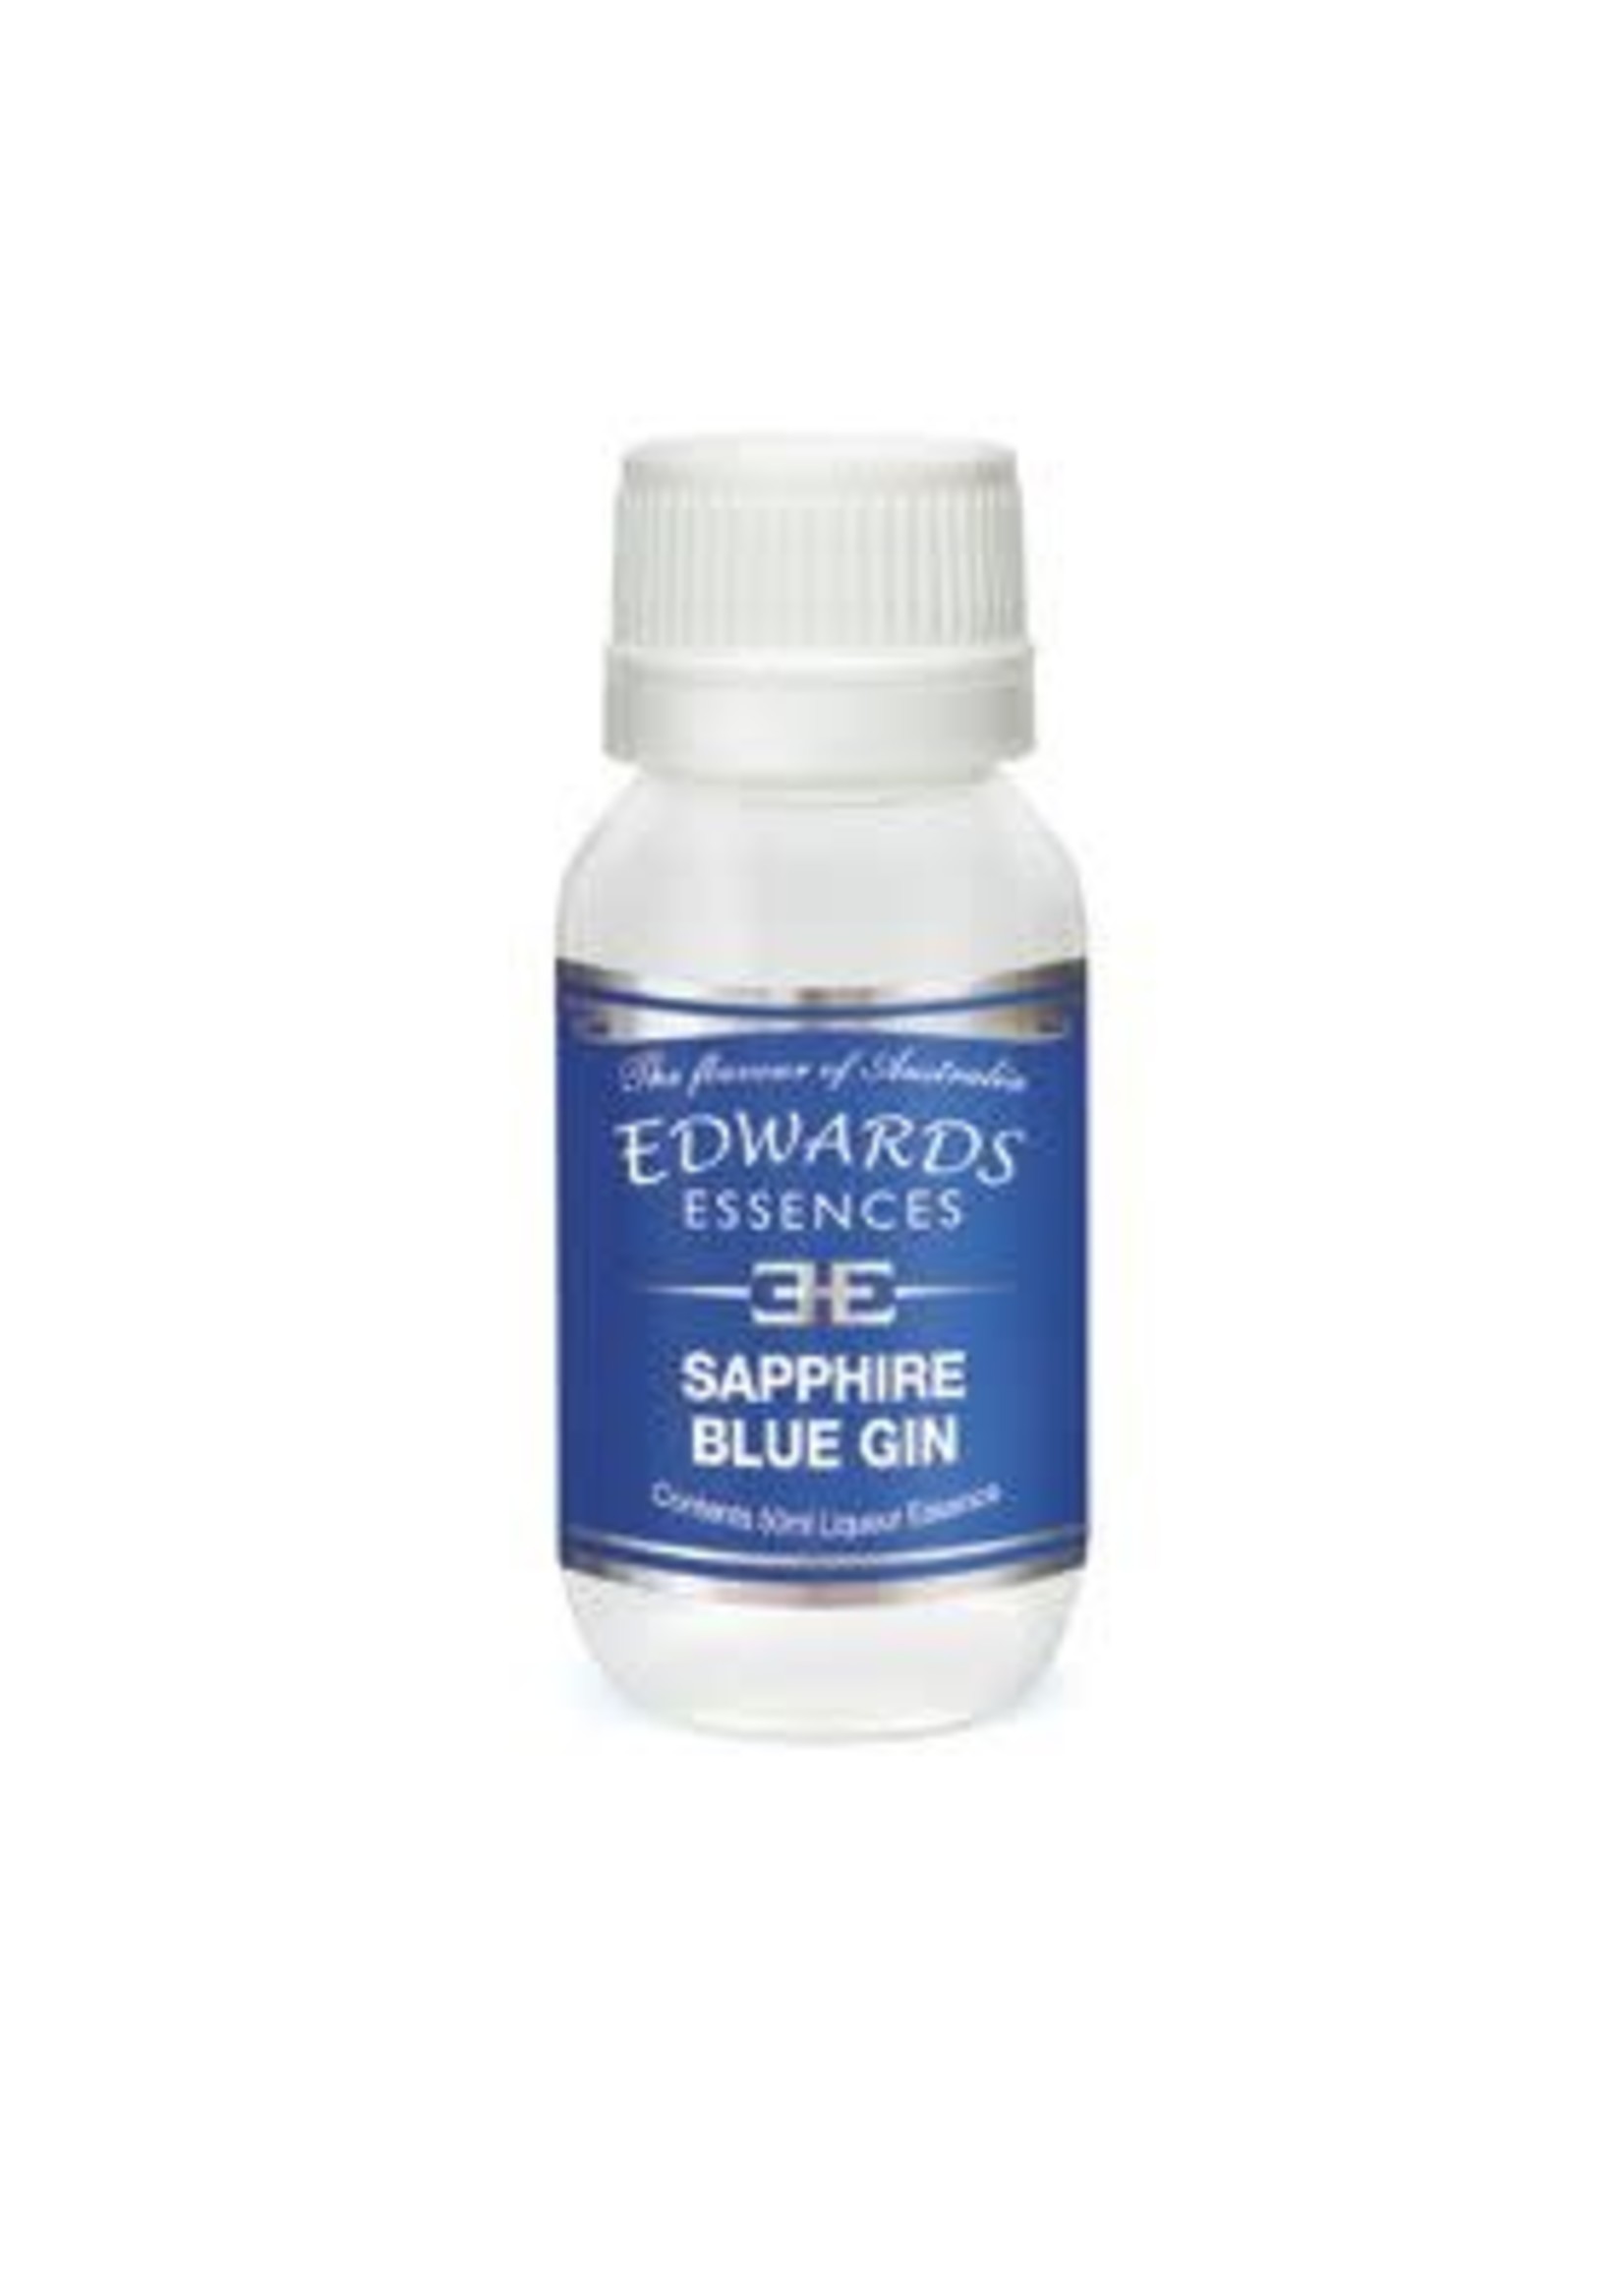 Edwards Essences Edwards Essences Sapphire Blue Gin 50ml